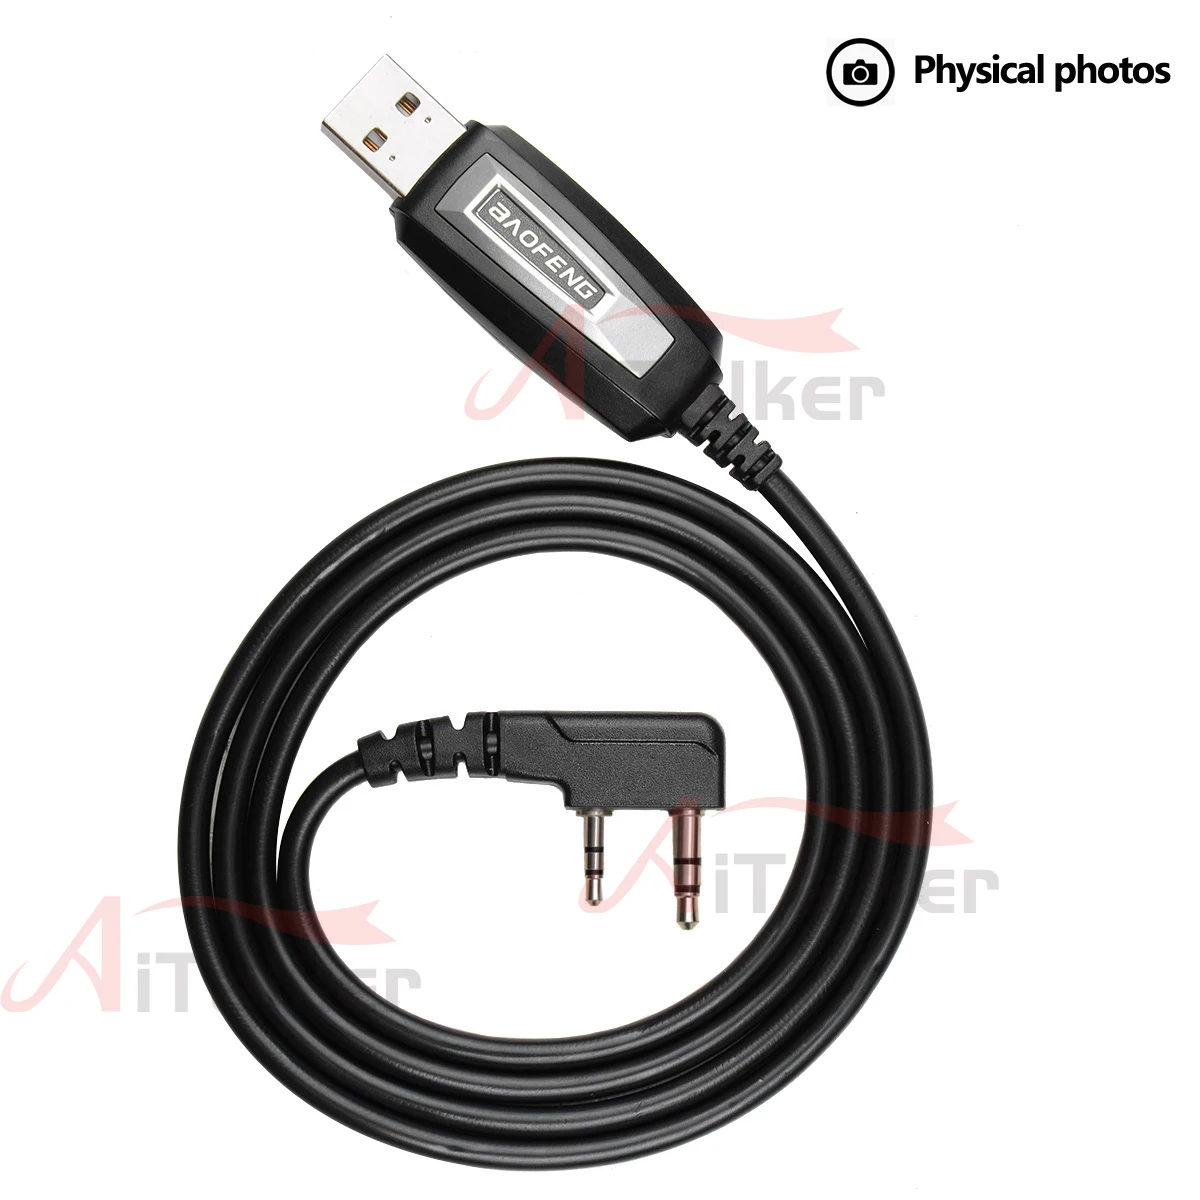 Quansheng UVK5 UVK6 UV5RPlus Original Baofeng USB Programming Cable With Driver CD For UV-5R BF-888S UV-82 Walkie Talkie